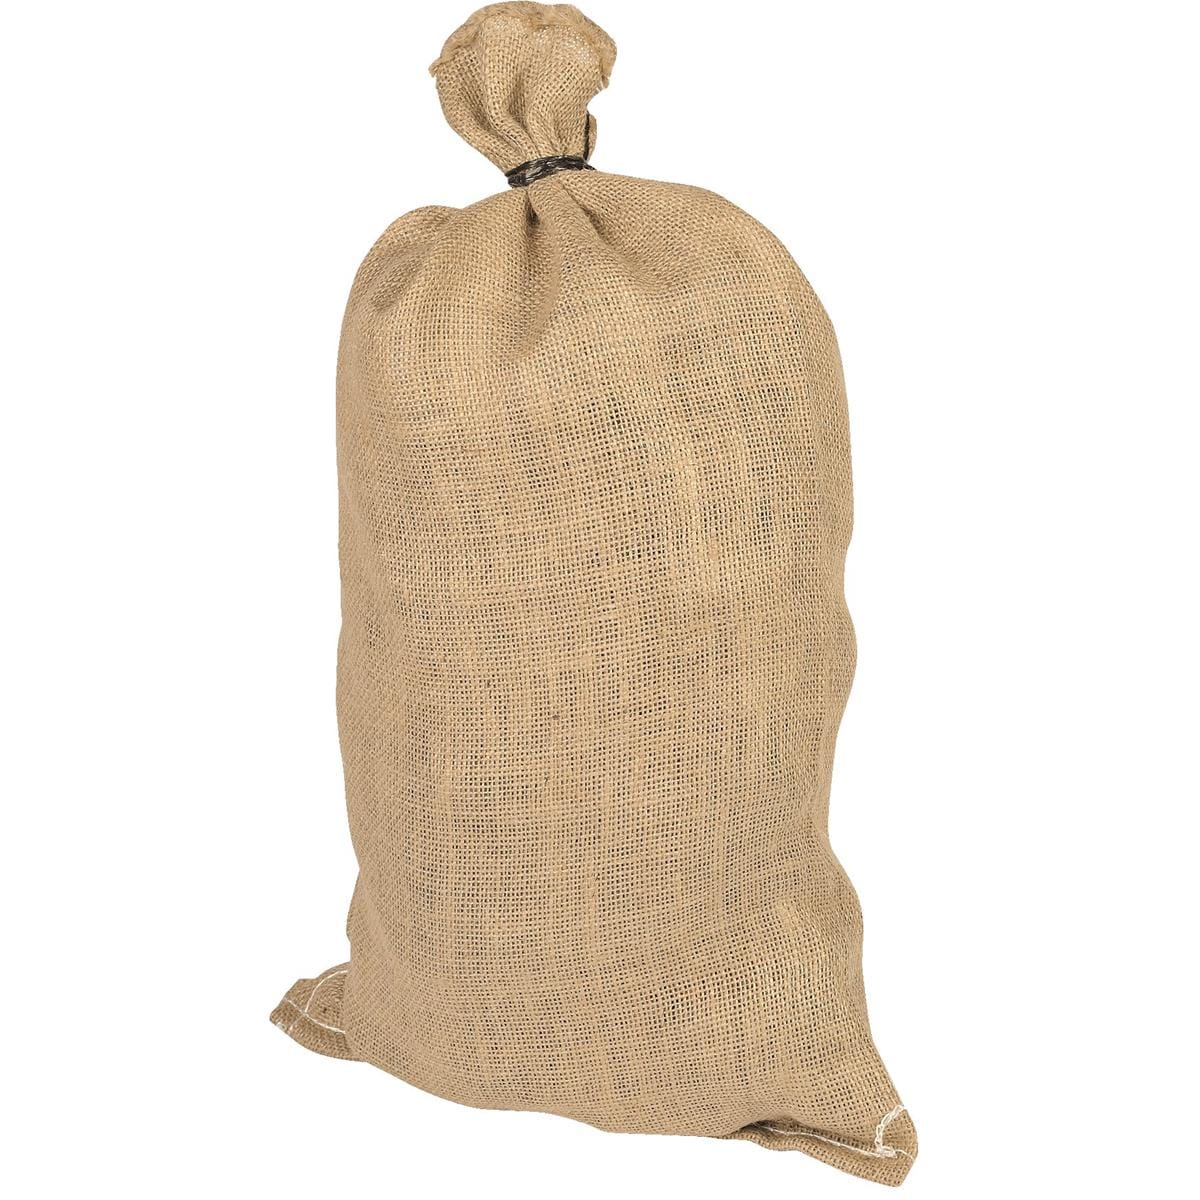 Dayton Bag & Burlap Plain Burlap Sand Bags